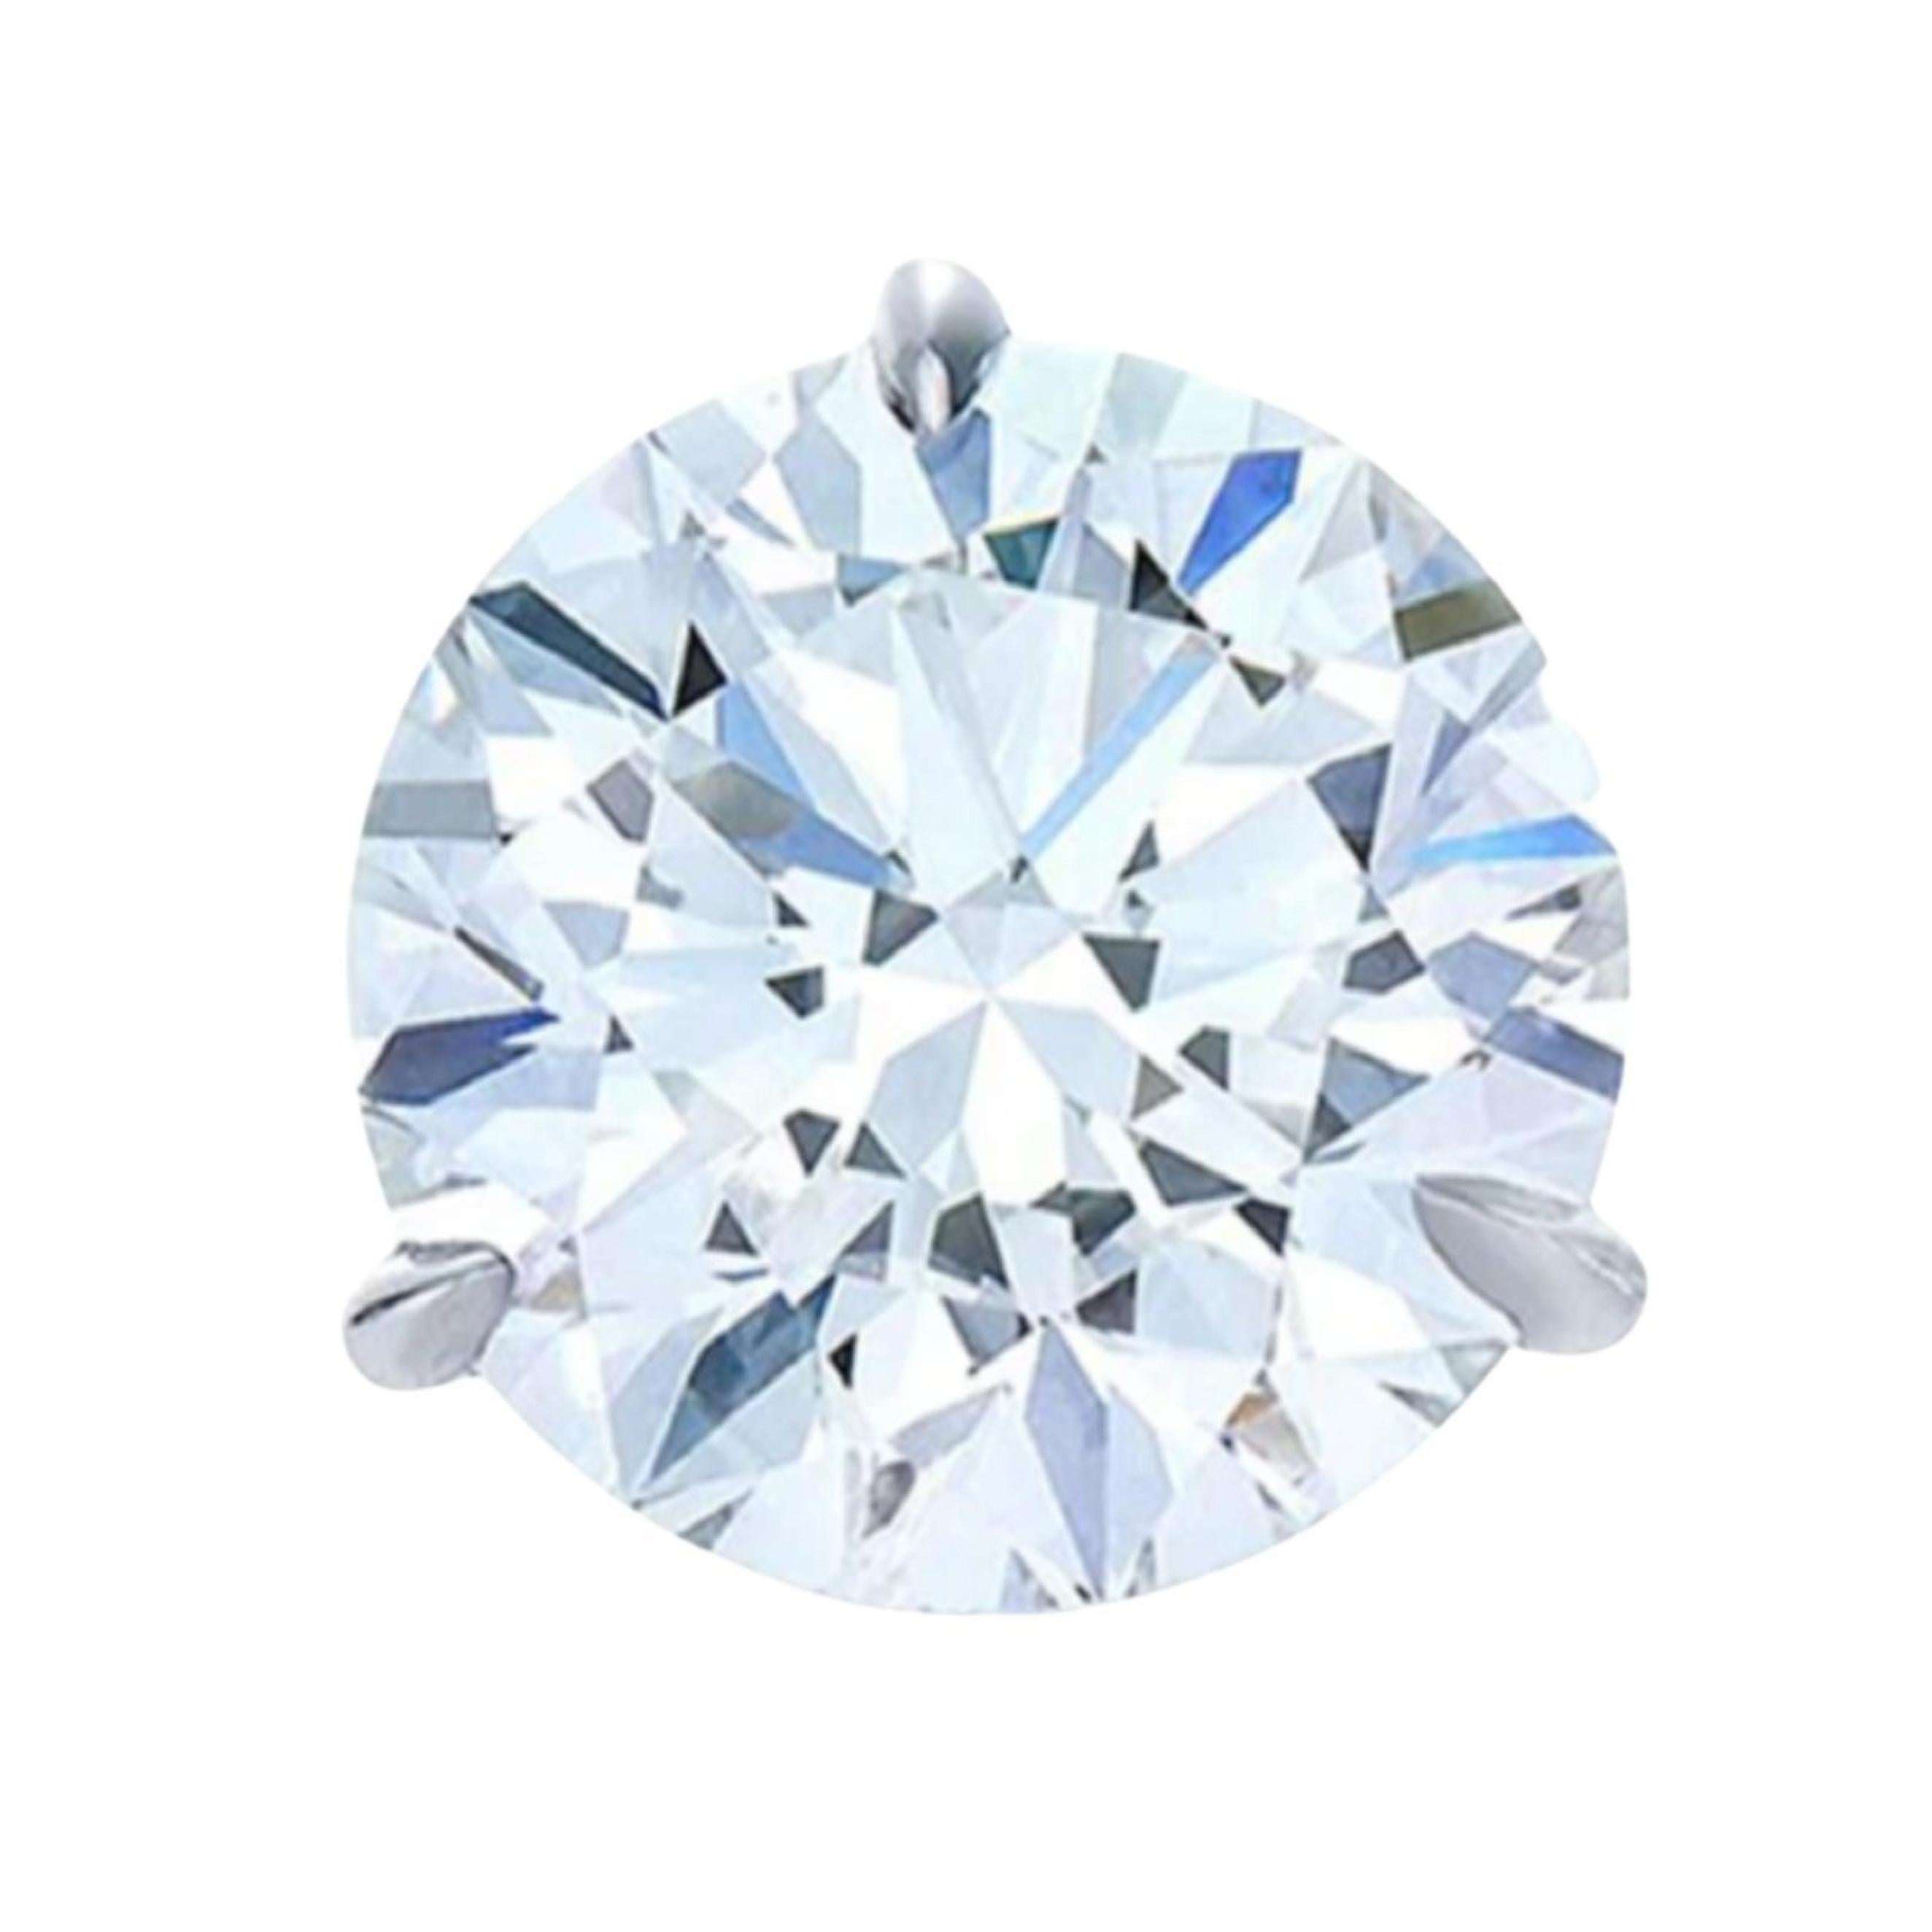 8 carat diamond earrings price